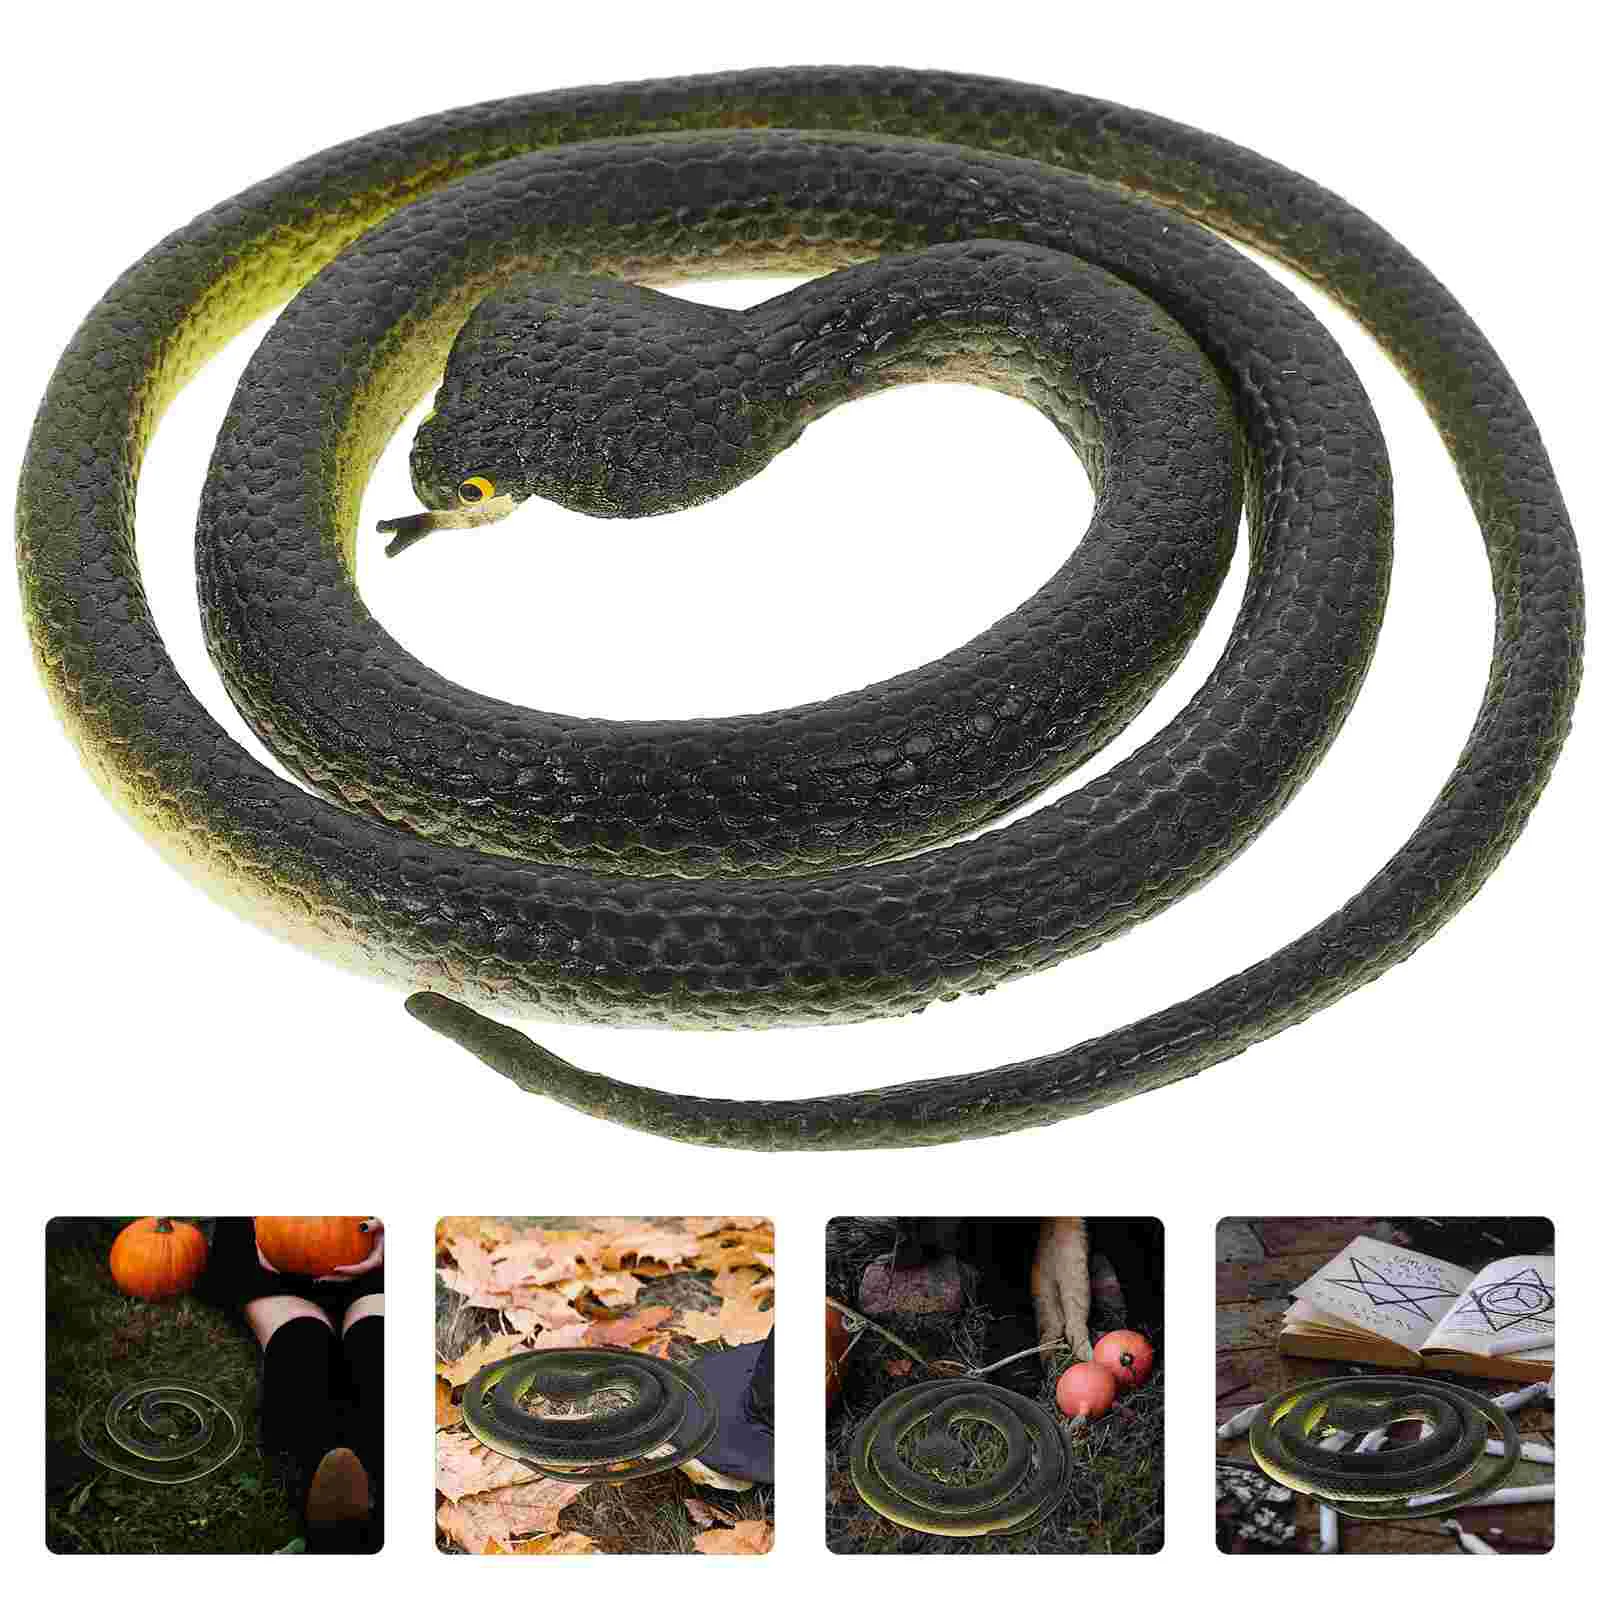 

Snake Toy Snakes Prank Fake Rubber Modeltoys Realistic Prop Artificialanimal Props Scary Garden Halloween Lifelike Tricky Trick